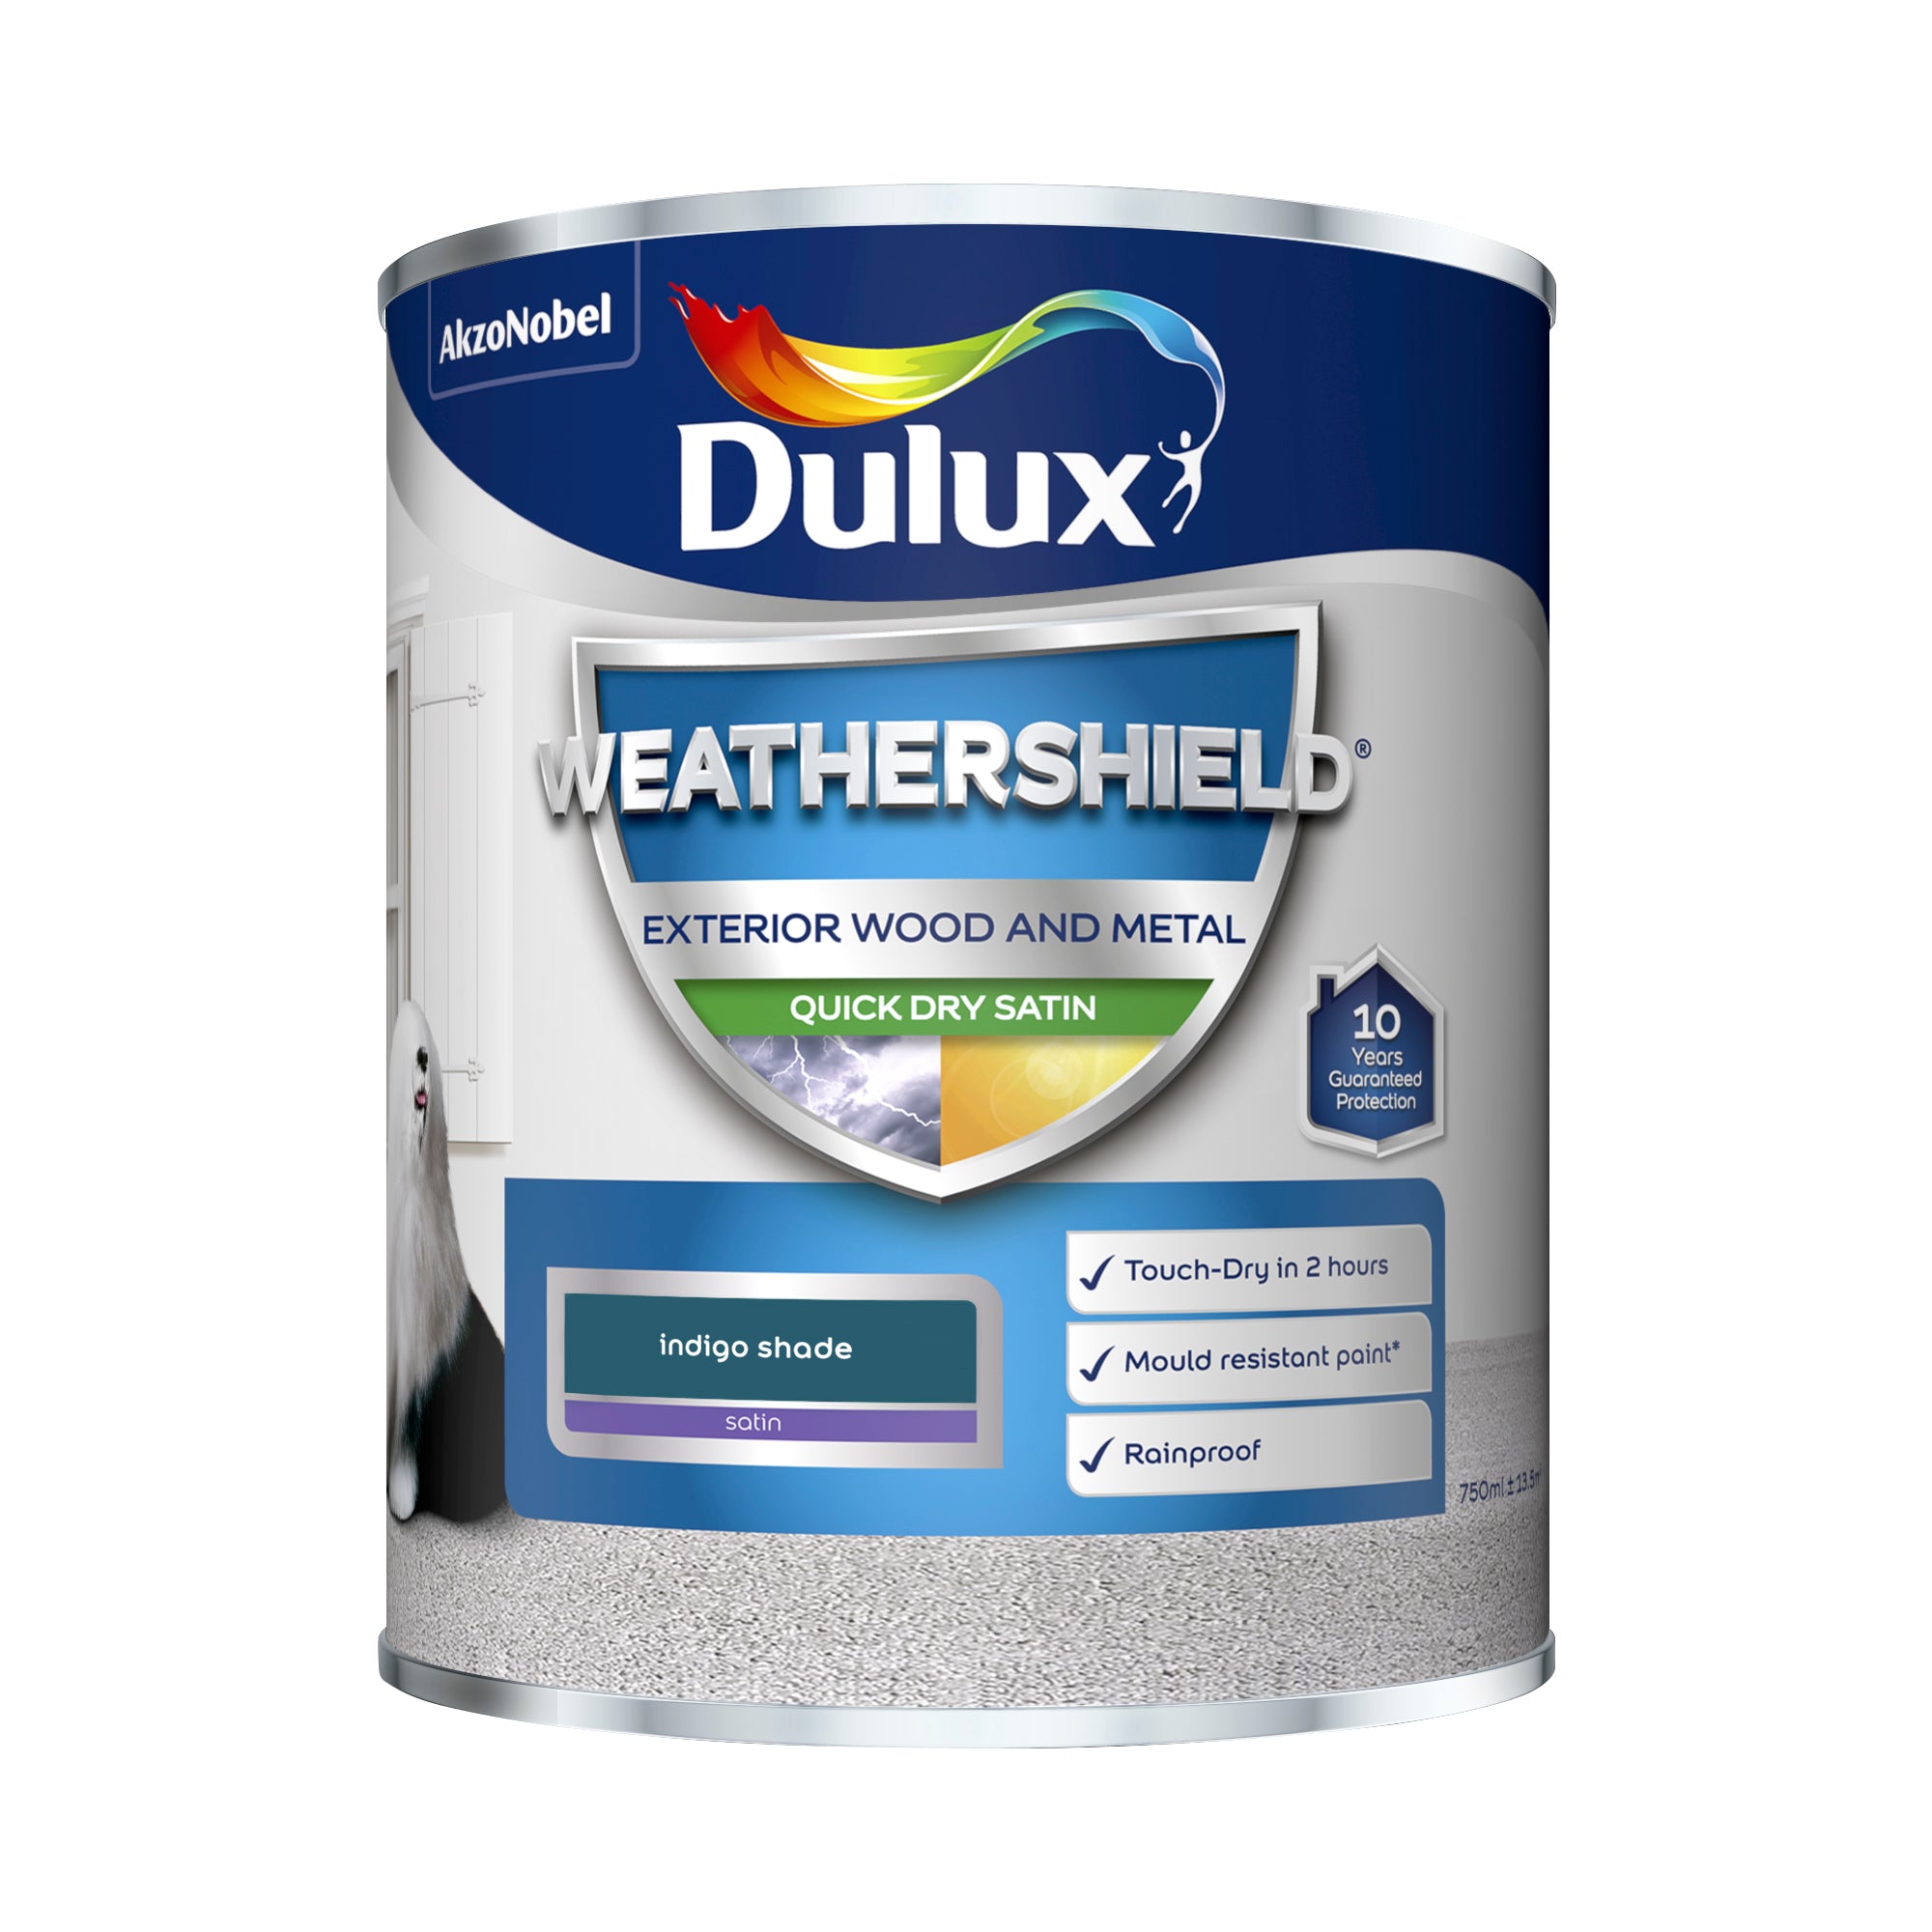 Dulux Weathershield Quick Dry Satin Indigo Shade 750ml